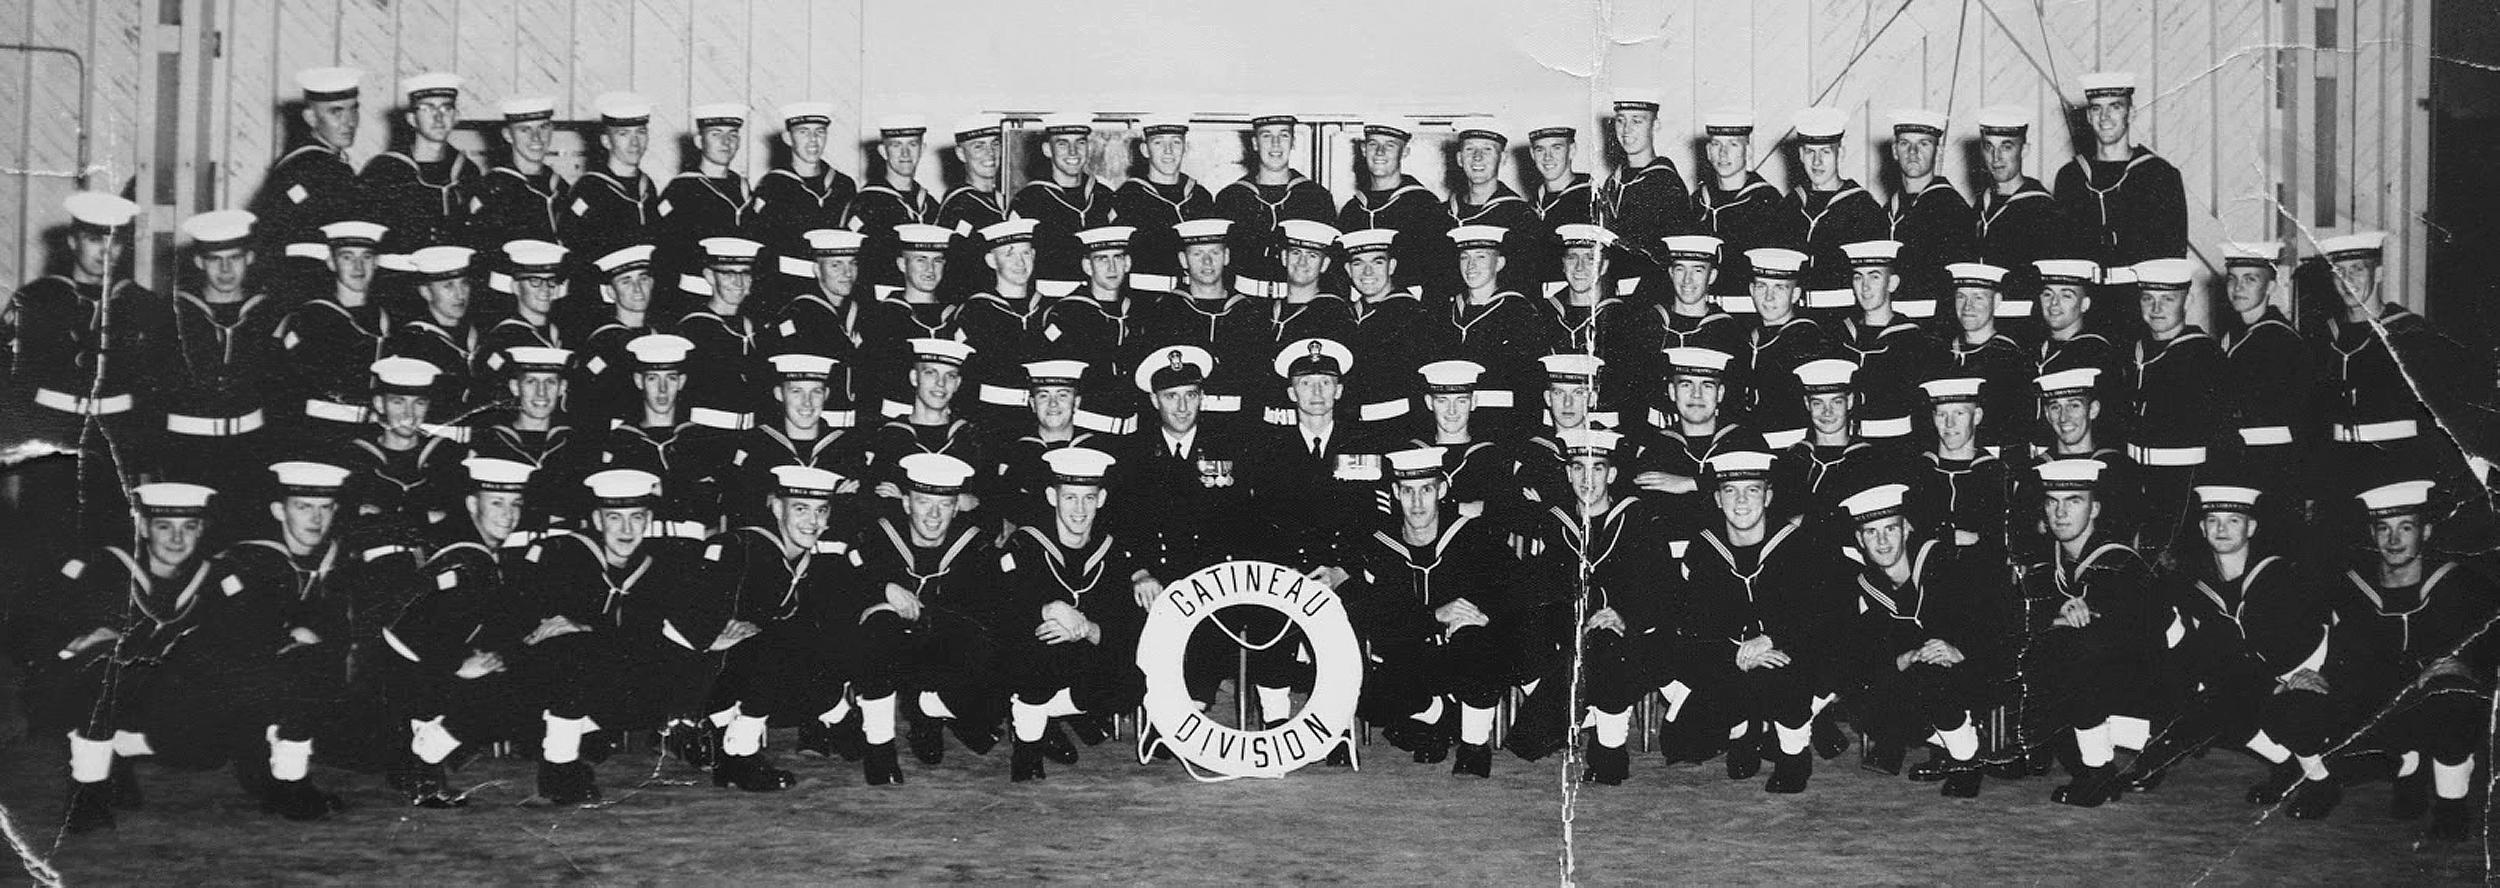 HMCS Cornwallis, Gatineau 2/62 Division.